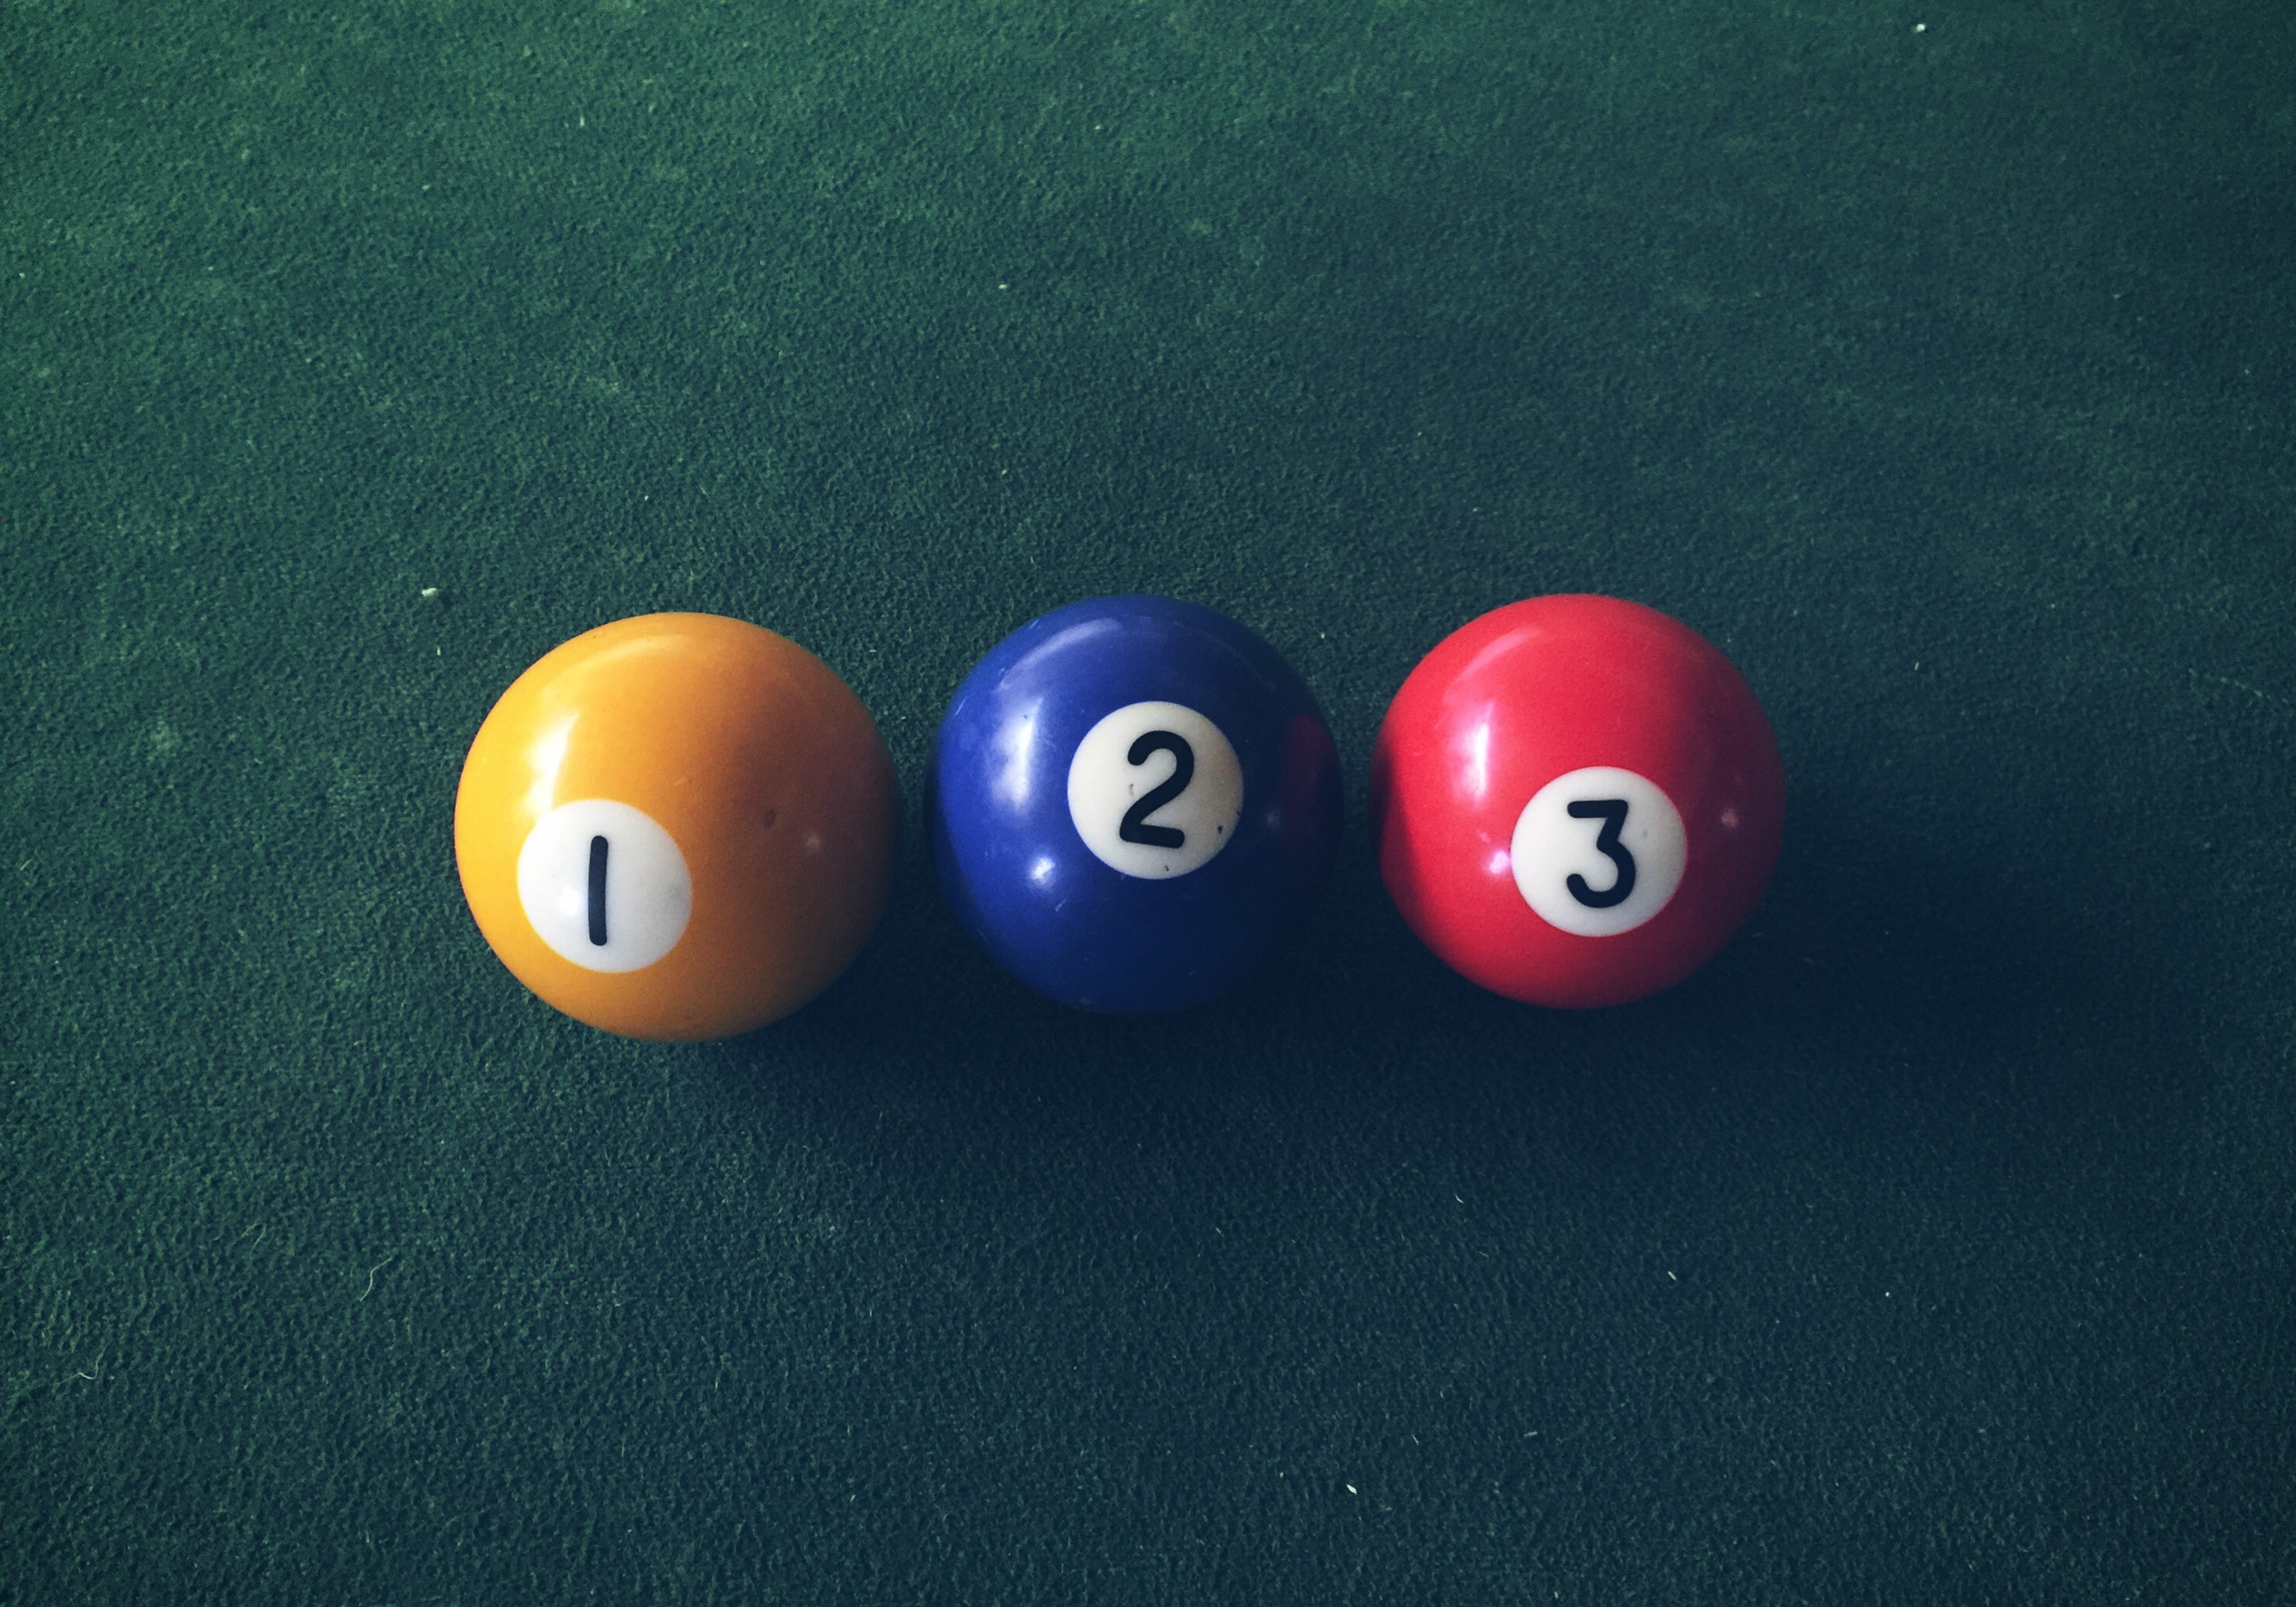 billiards 123 yellow blue red freetoedit image by @shawnson